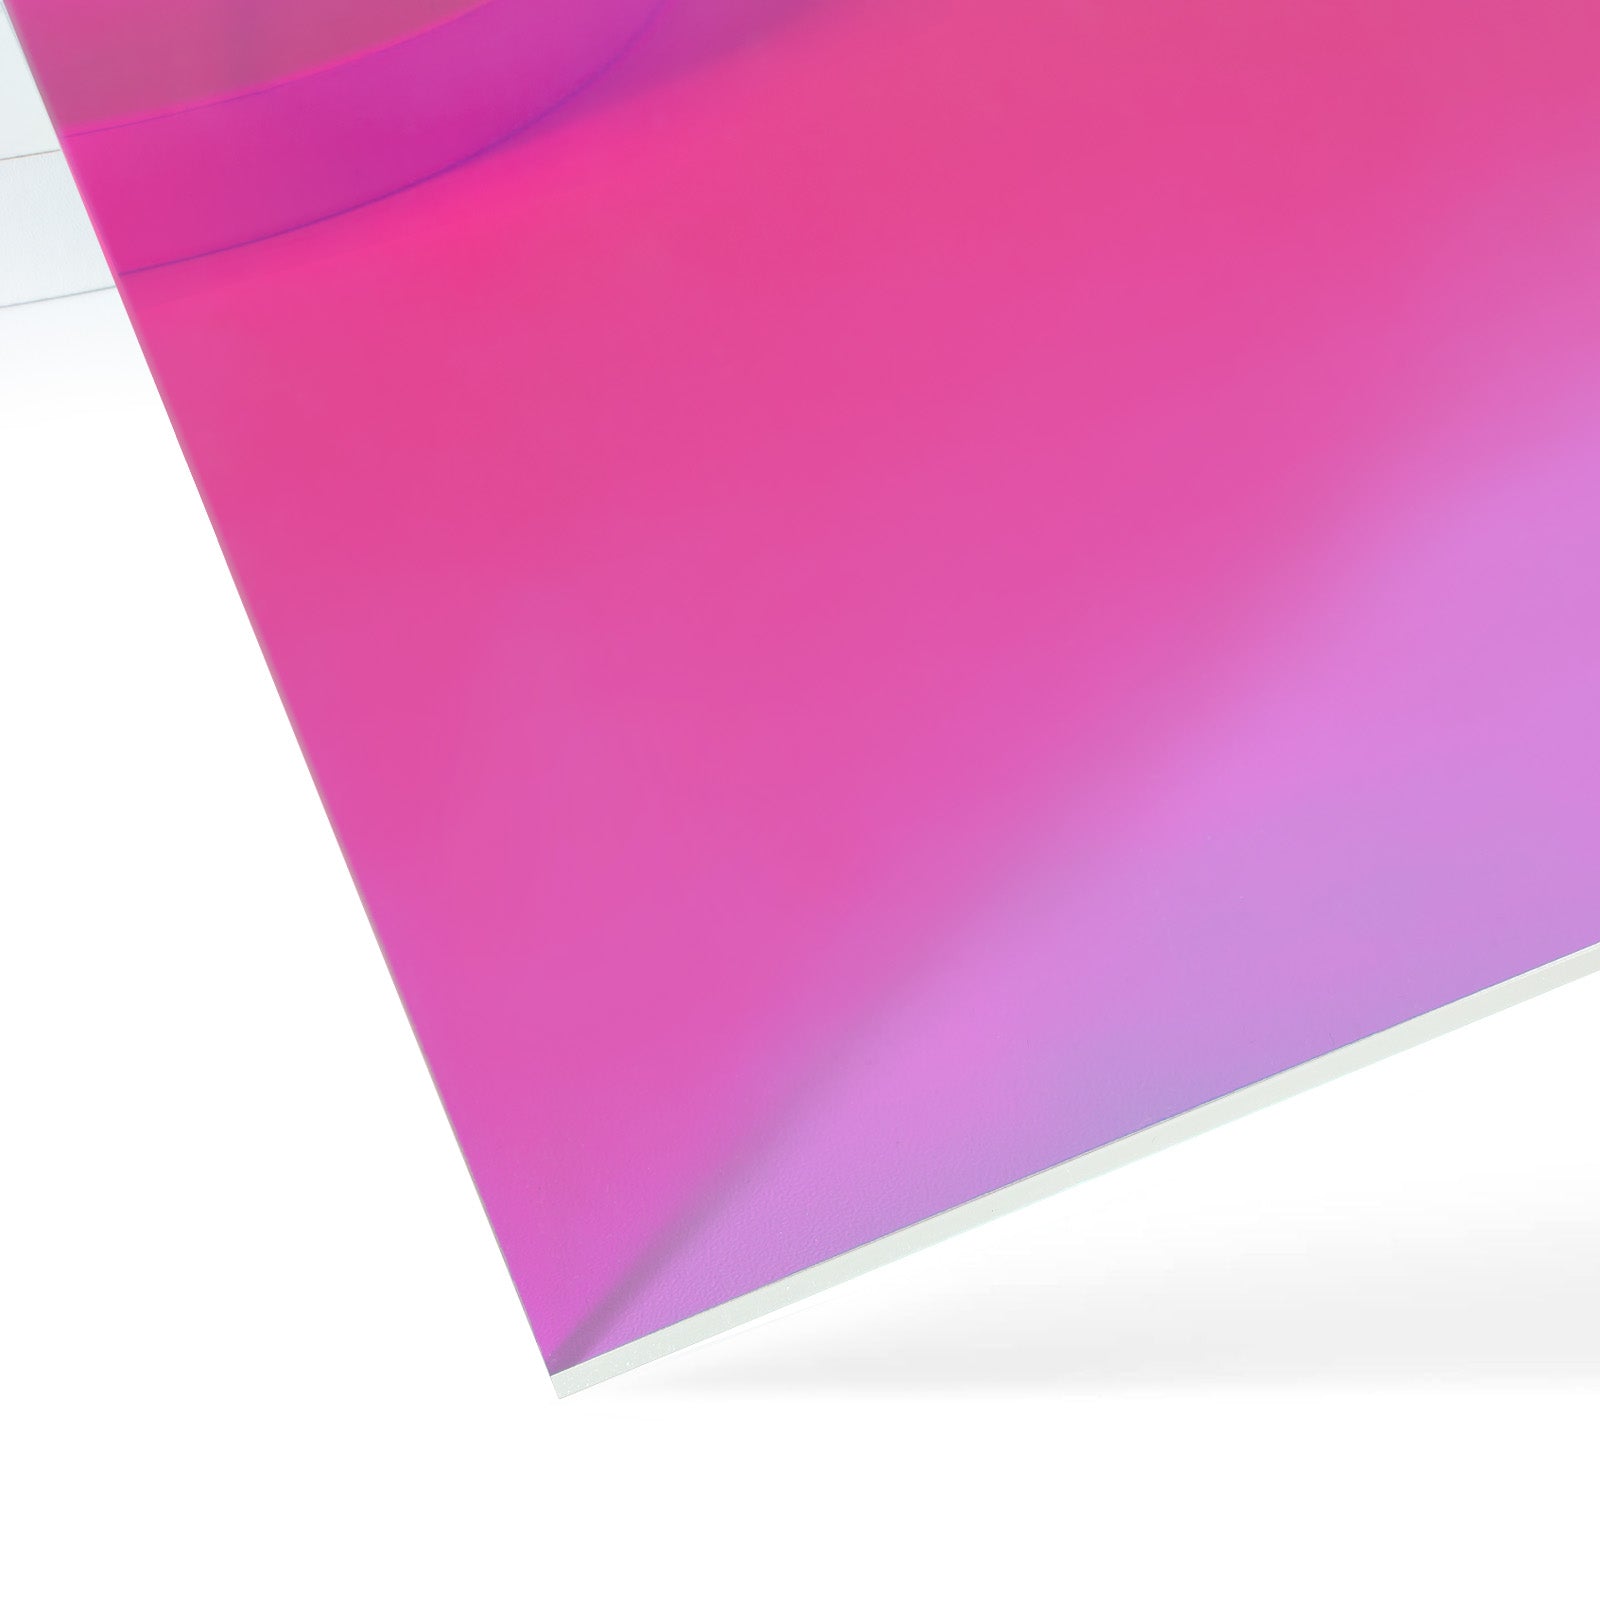 Pink Acrylic Sheet